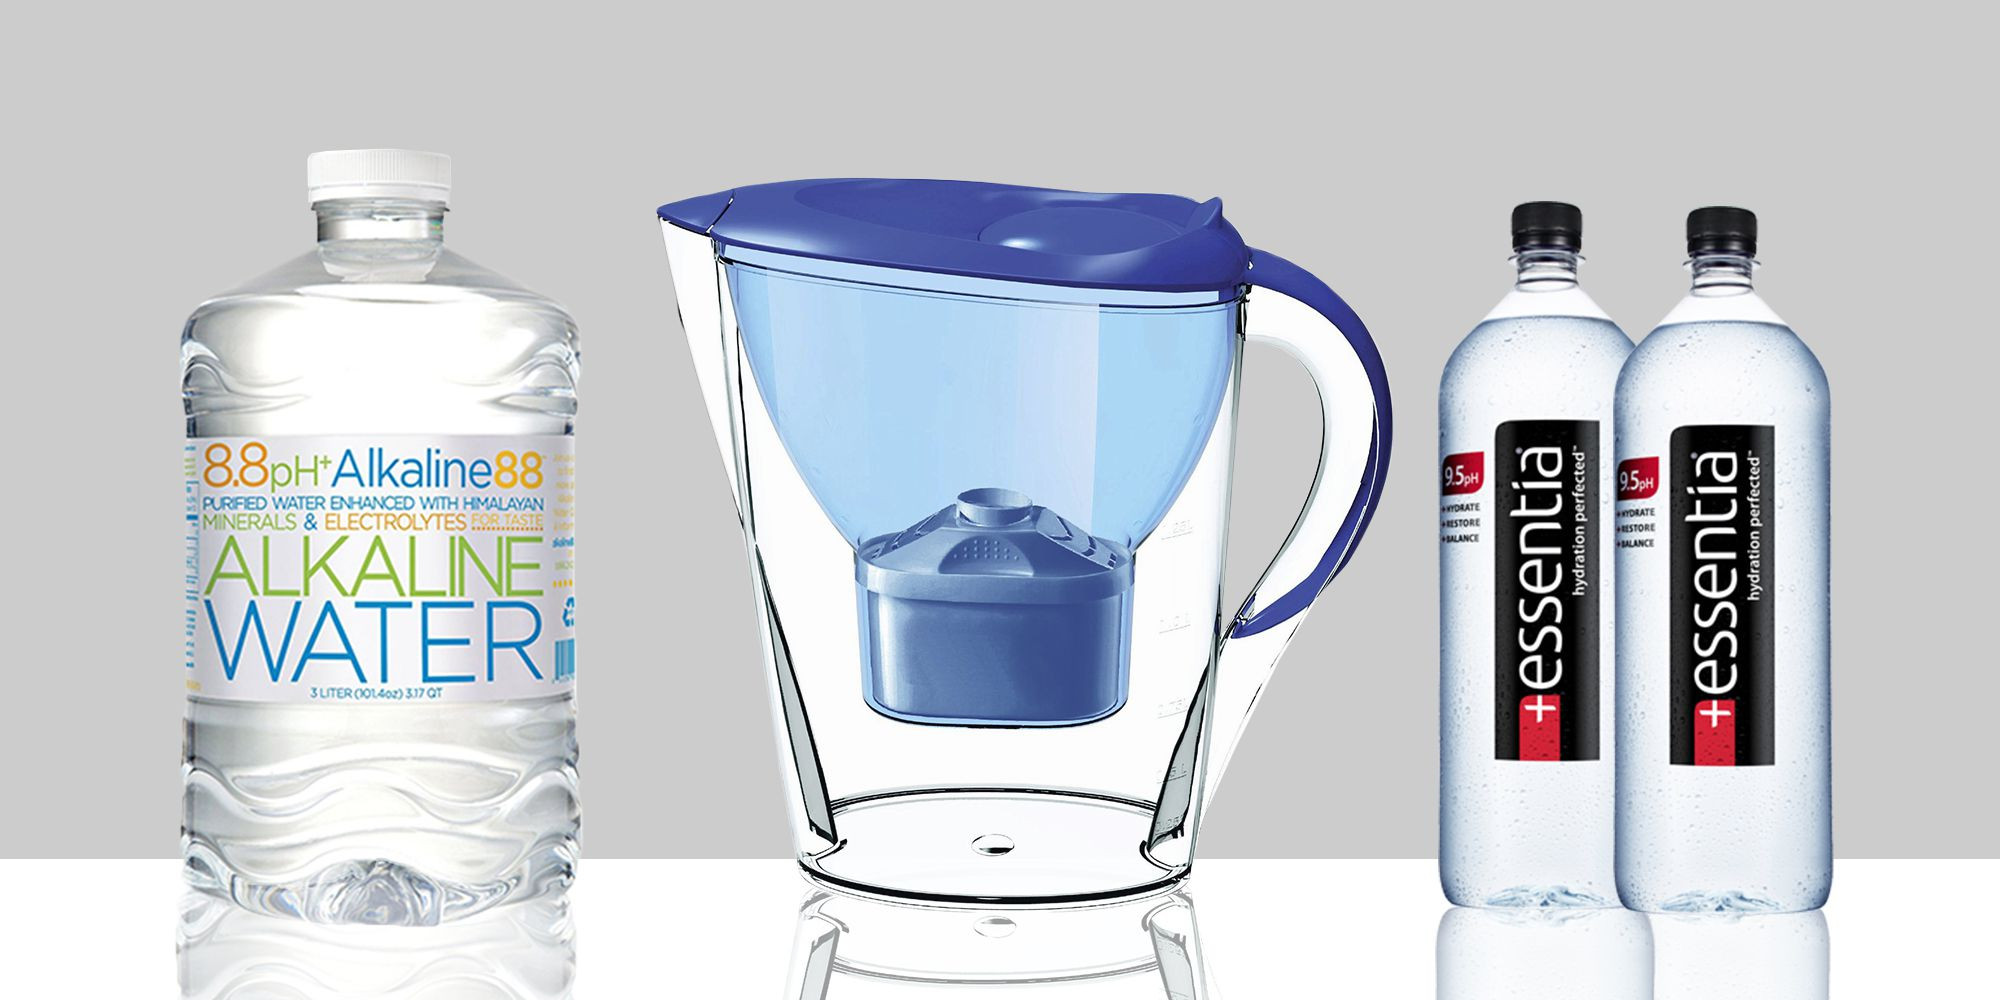 Best ideas about DIY Alkaline Water
. Save or Pin Diy Alkaline Water Bottle Clublifeglobal Now.